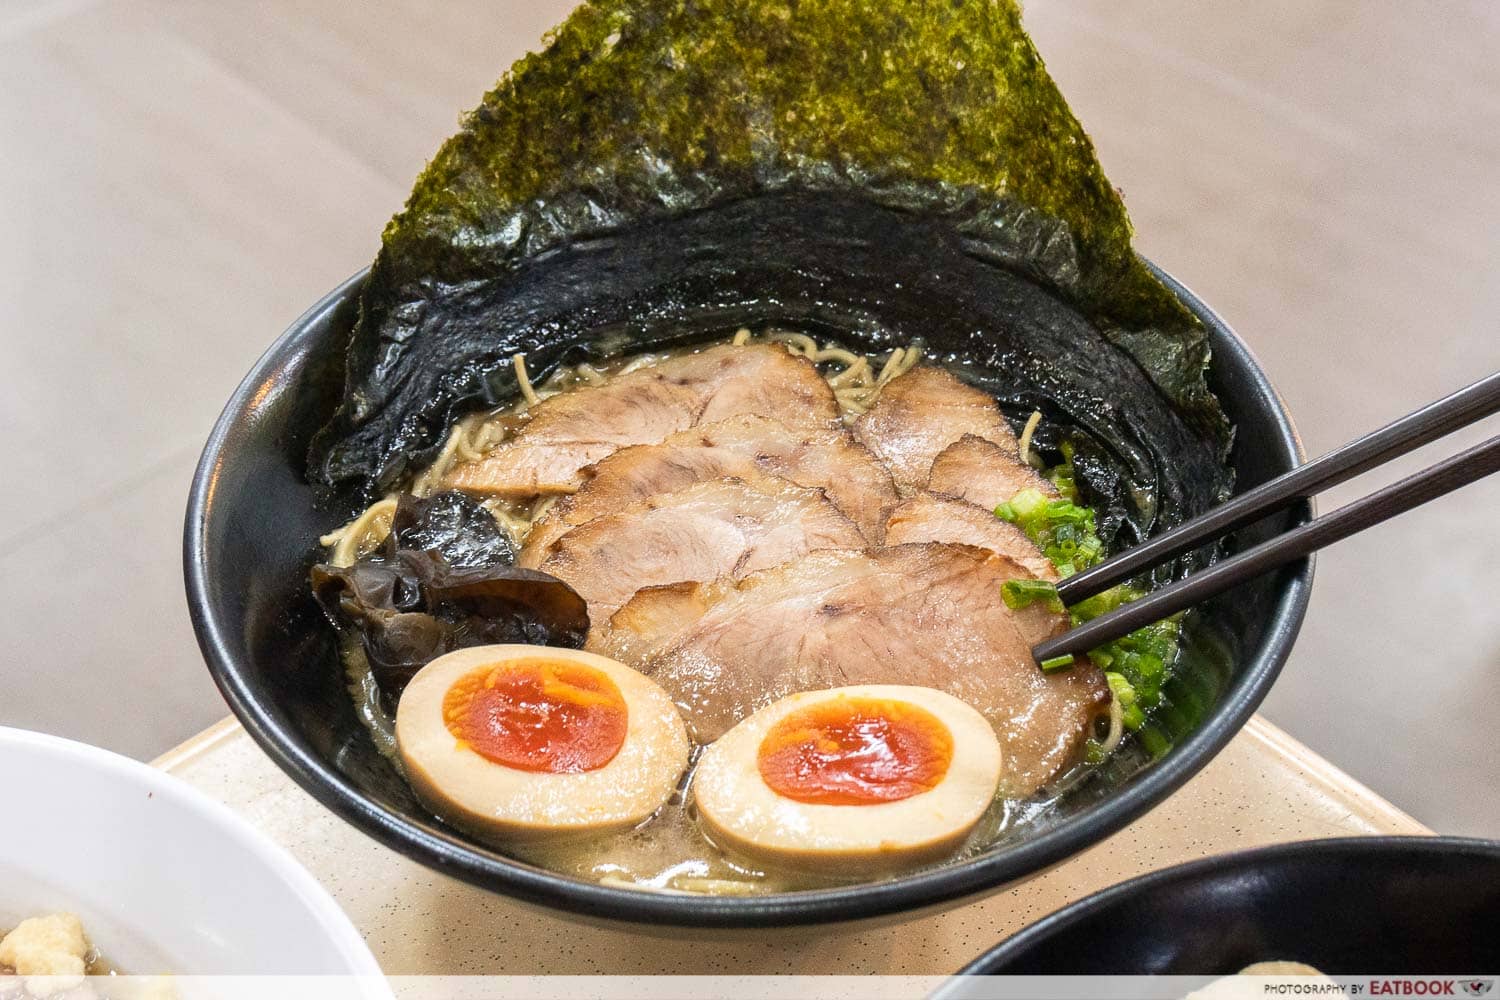 shinjitsu ramen buffet - tonkotsu special ramen